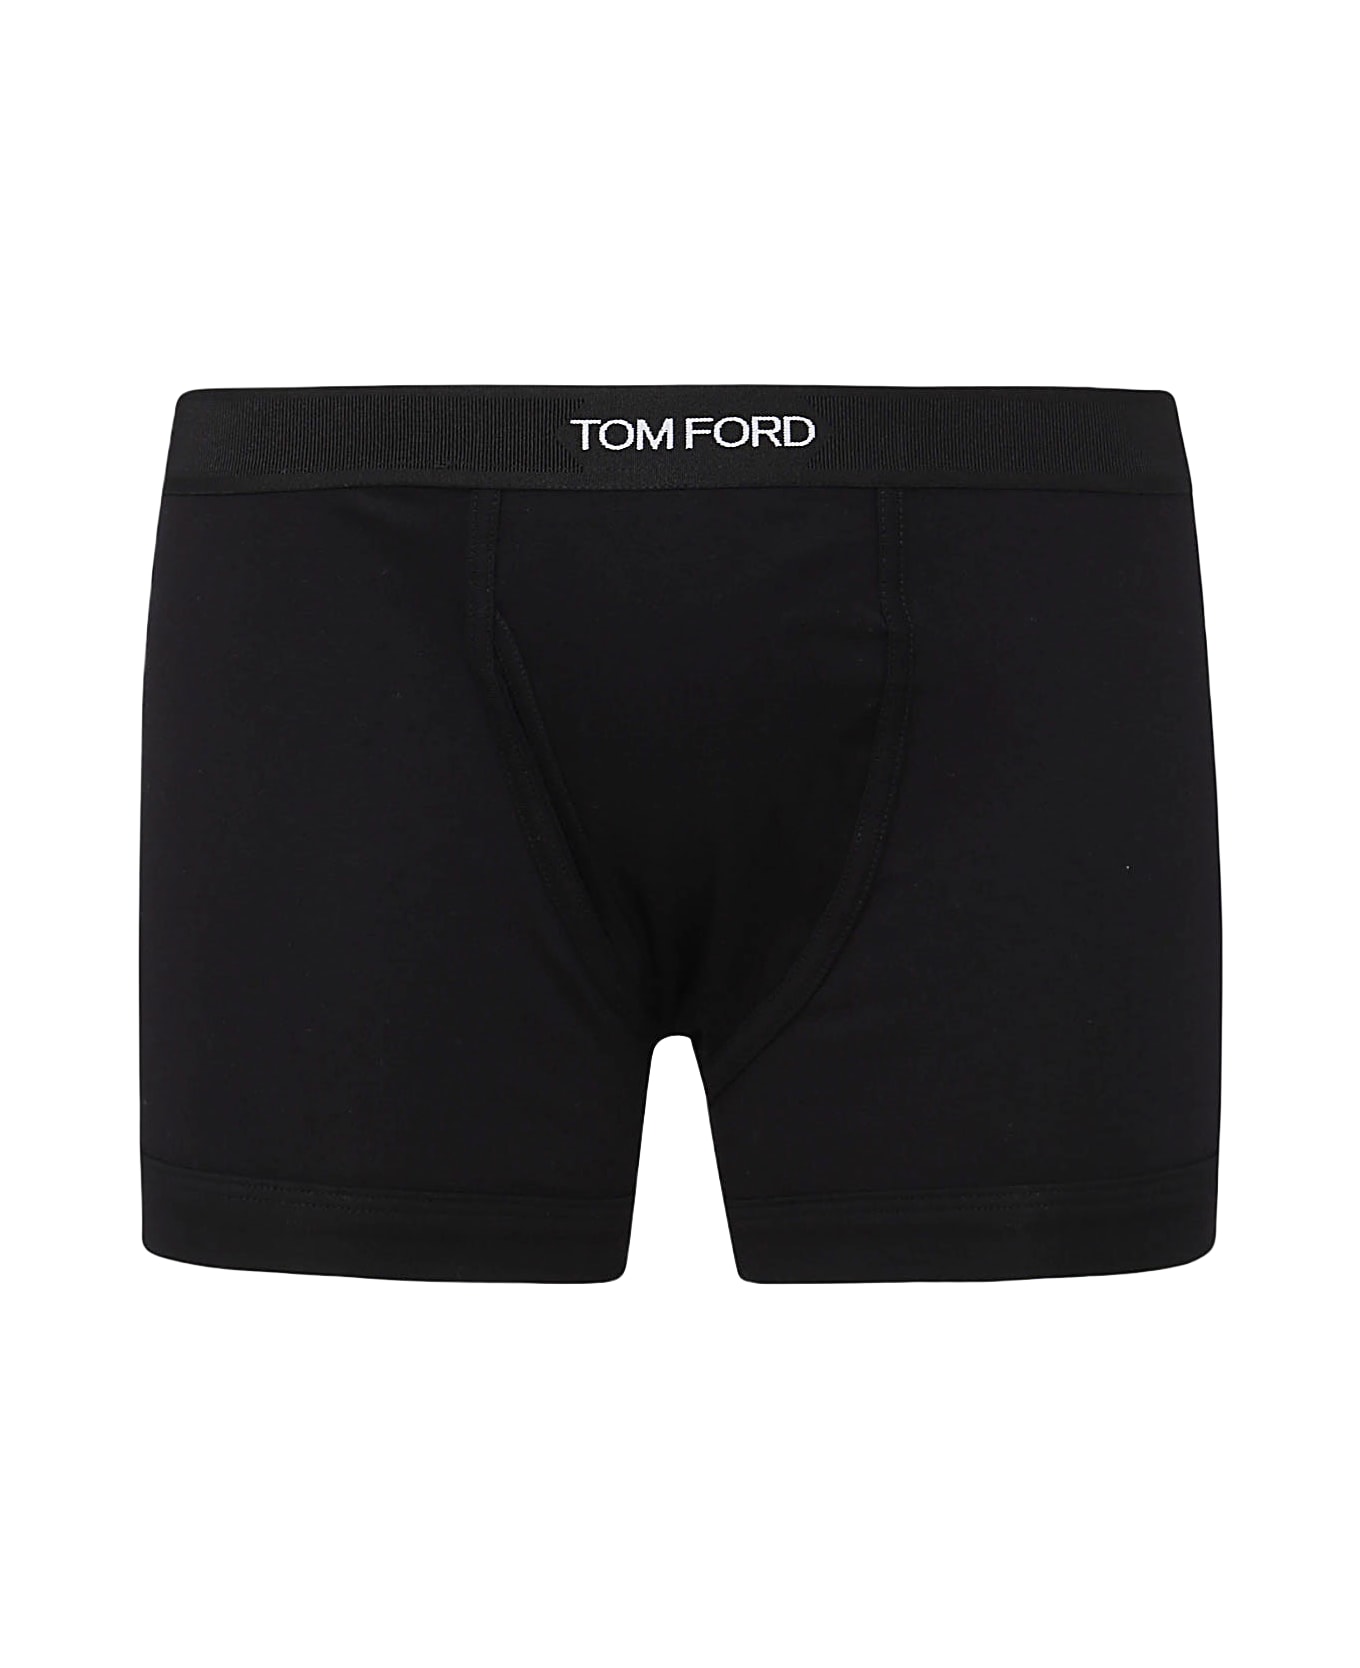 Tom Ford Black Cotton Blend Boxers Set - Black ショーツ